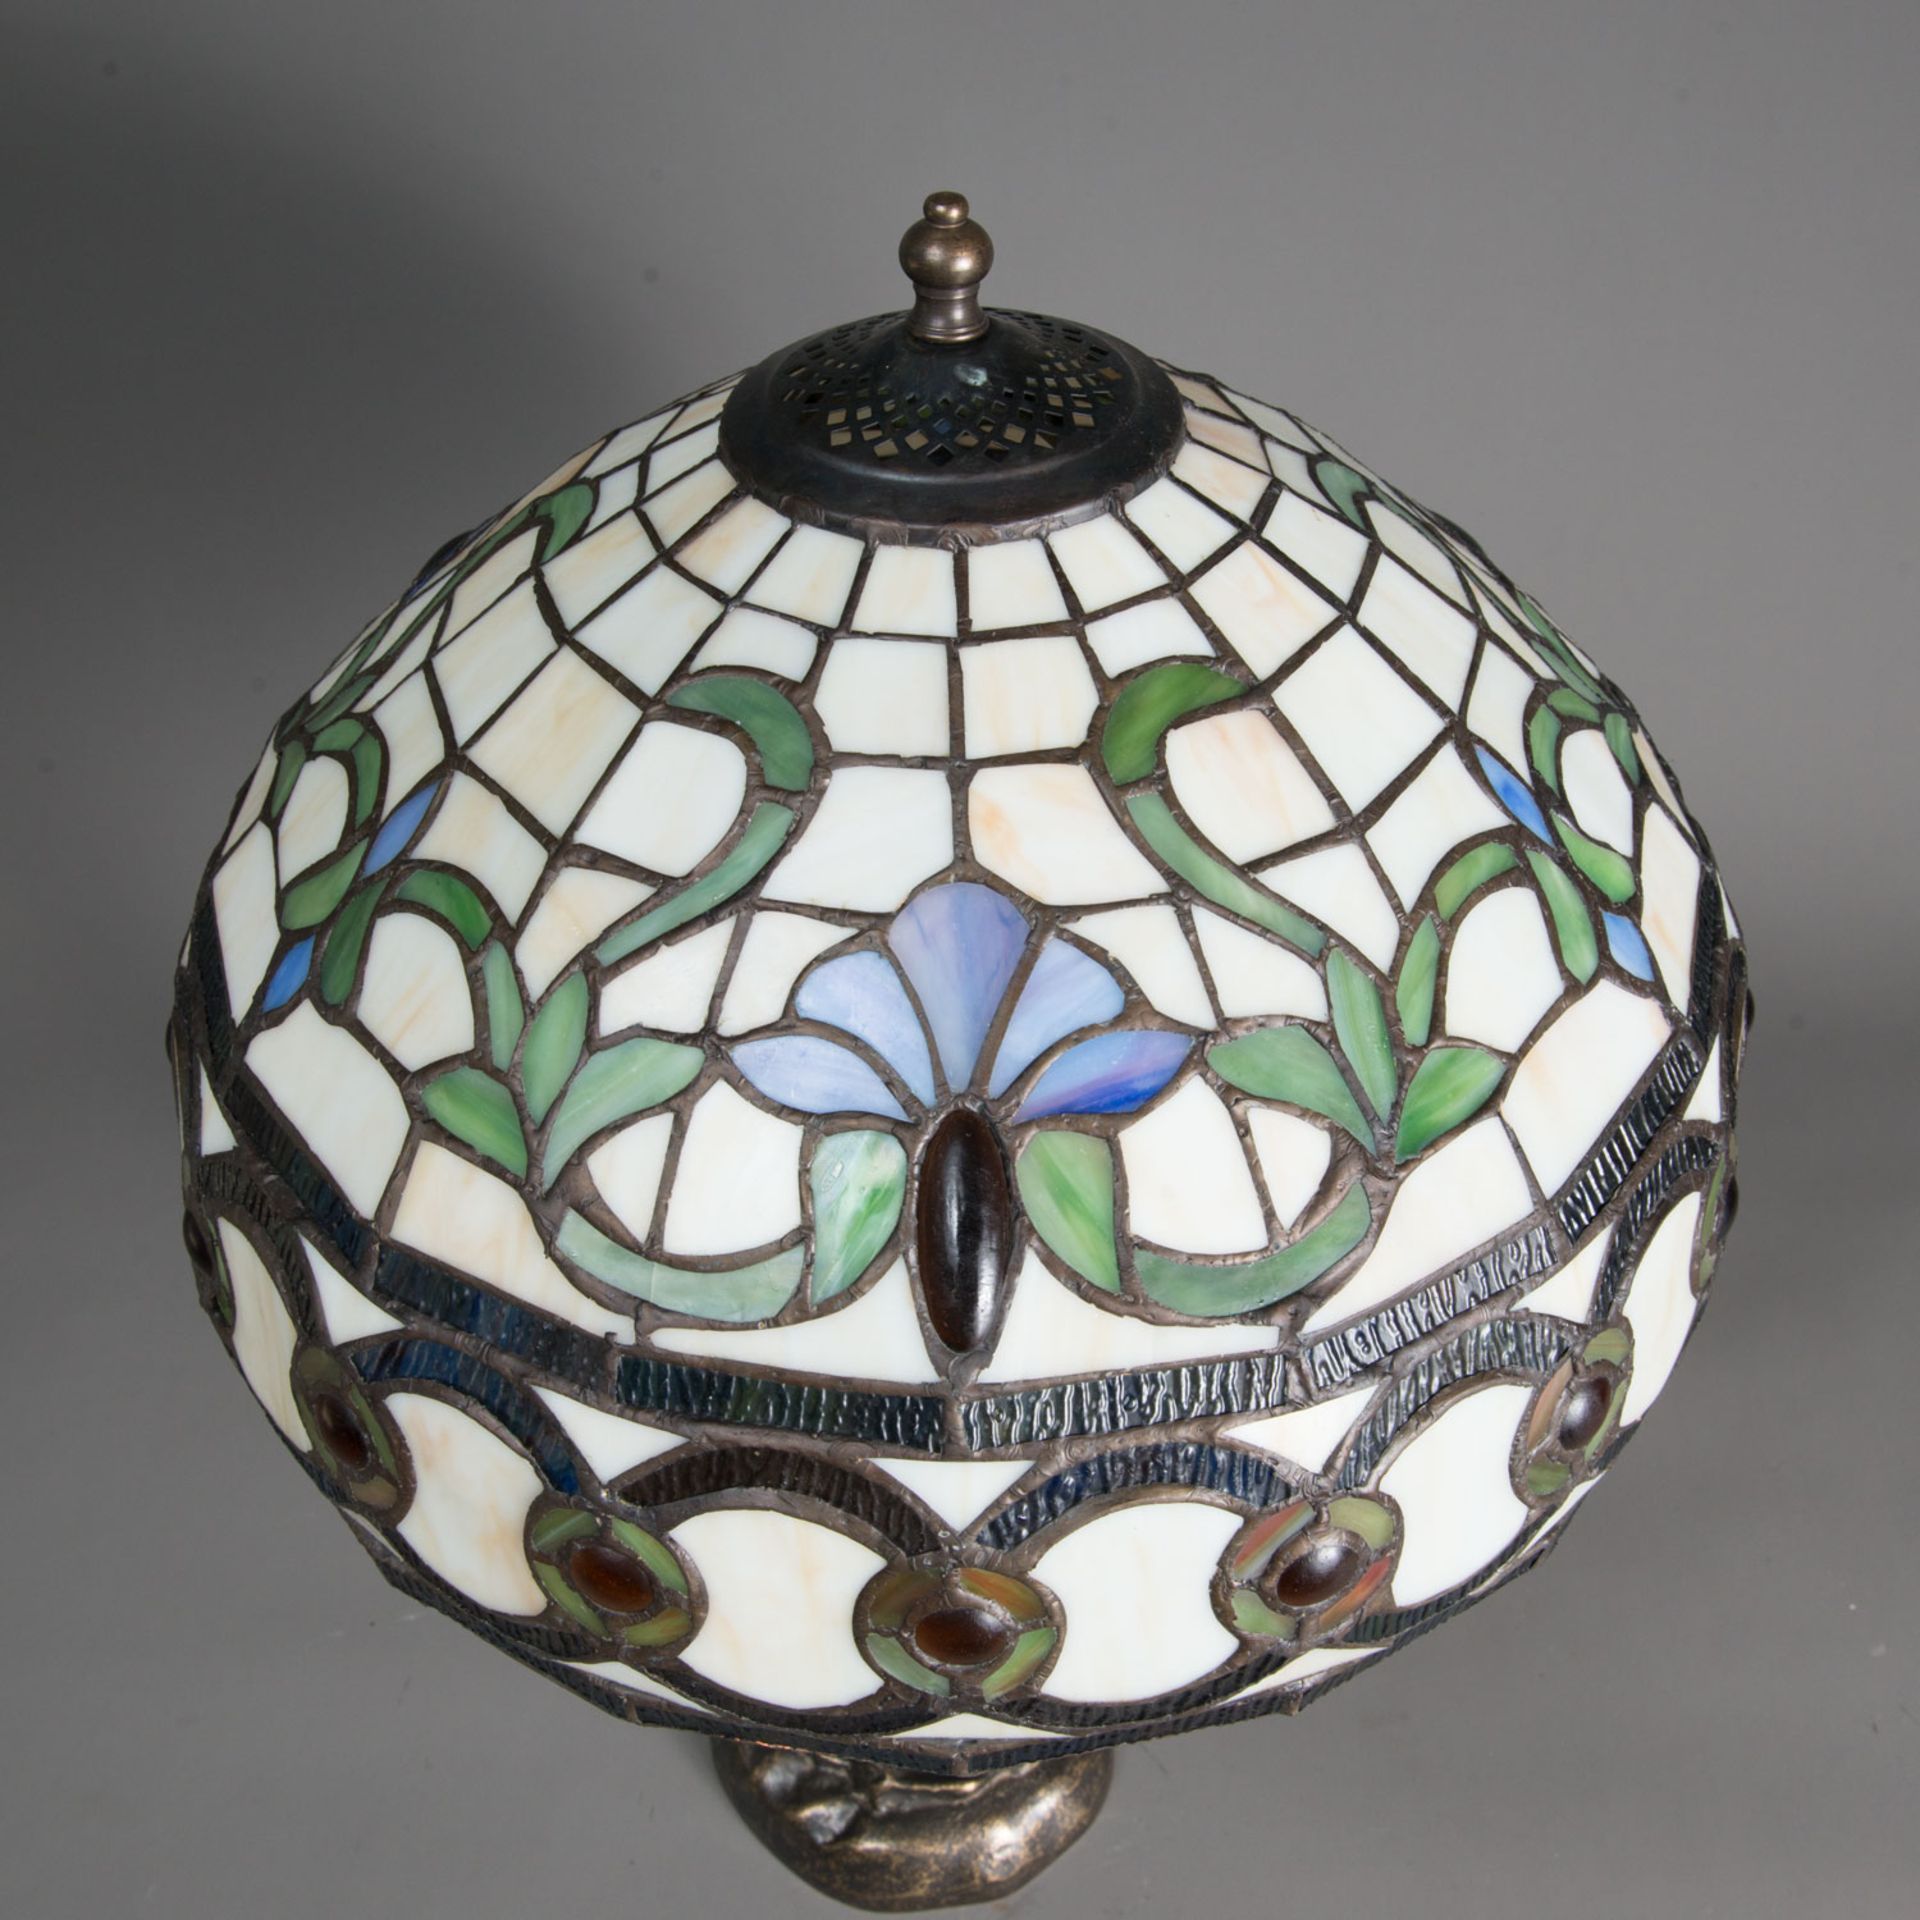 Tiffany style lamp - Image 3 of 3